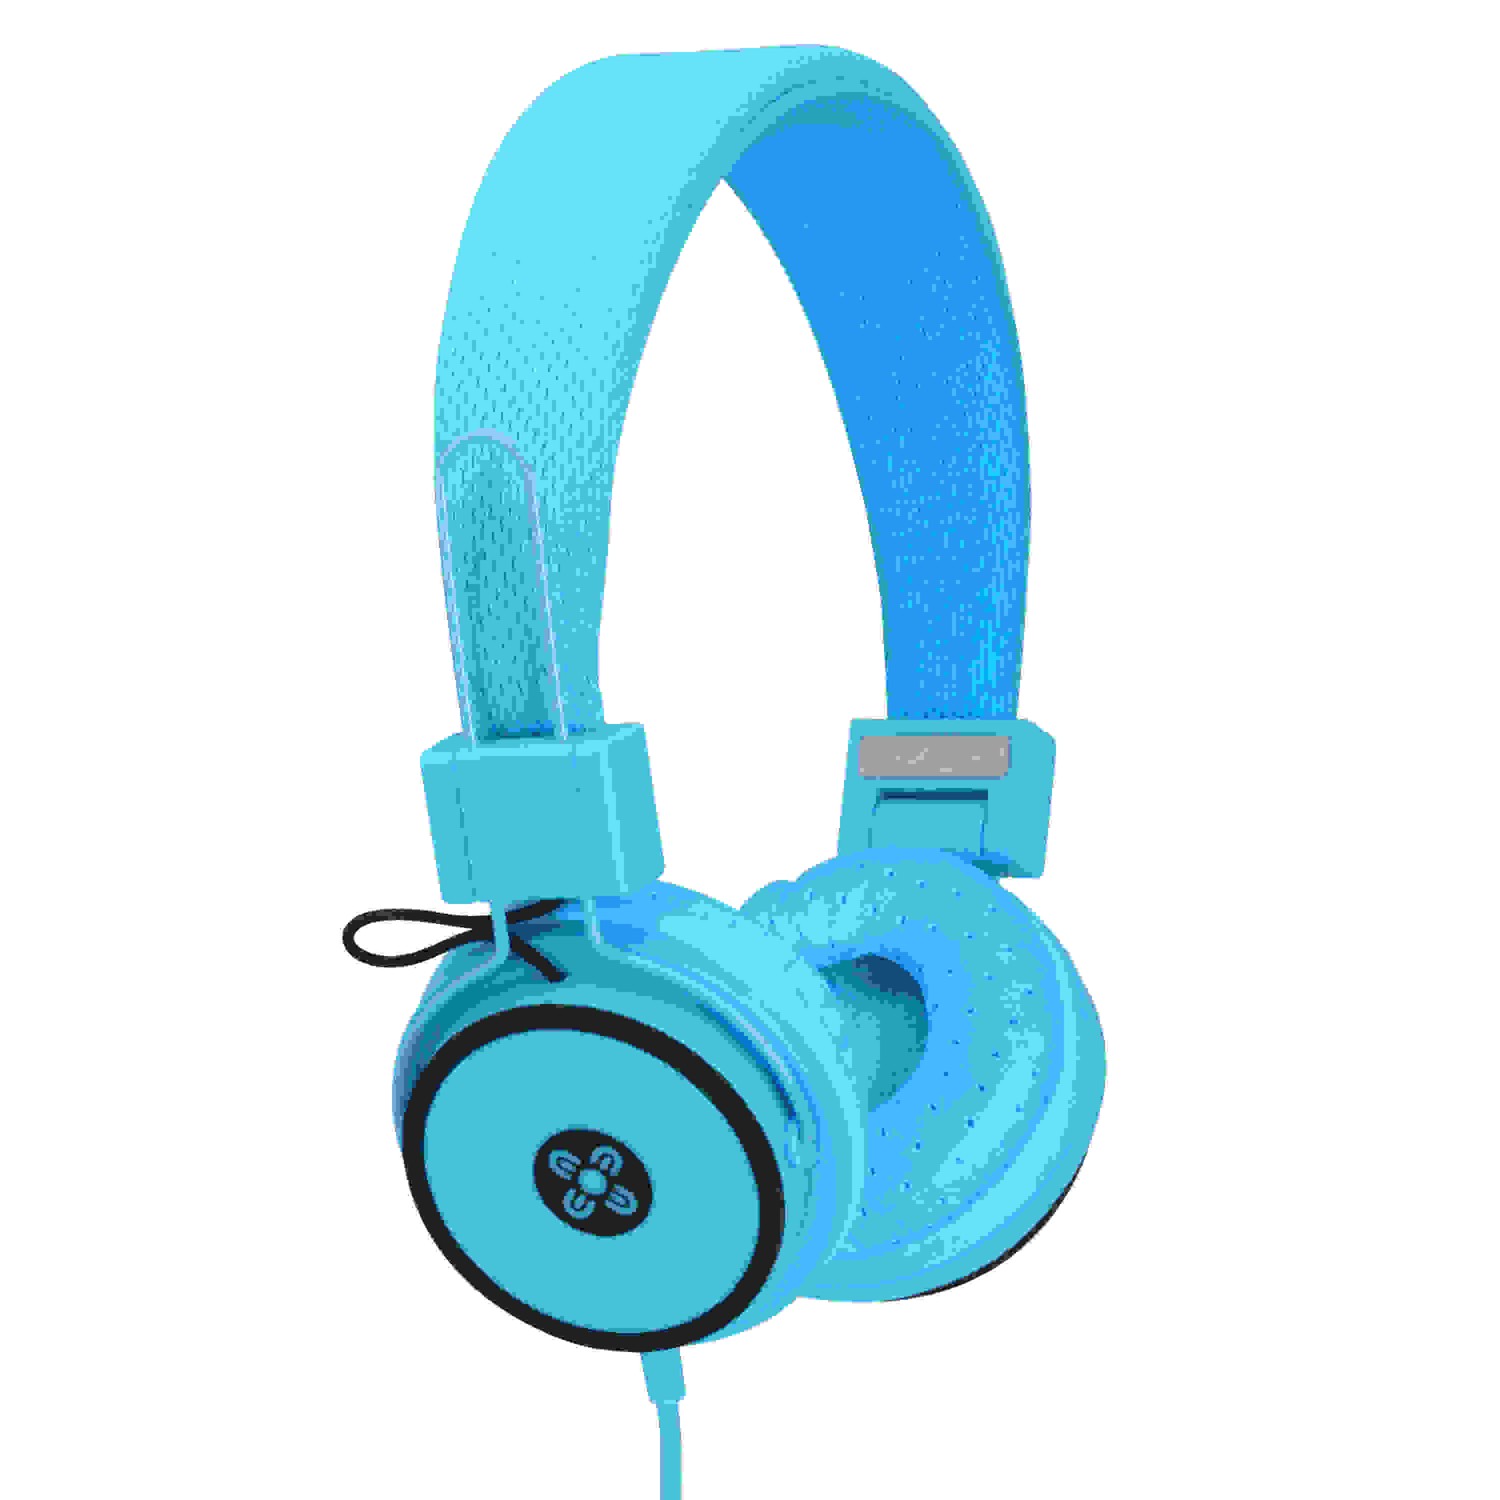 Moki ACC HPHYB Blue Hyper Headphone, Are Lightweight Yet